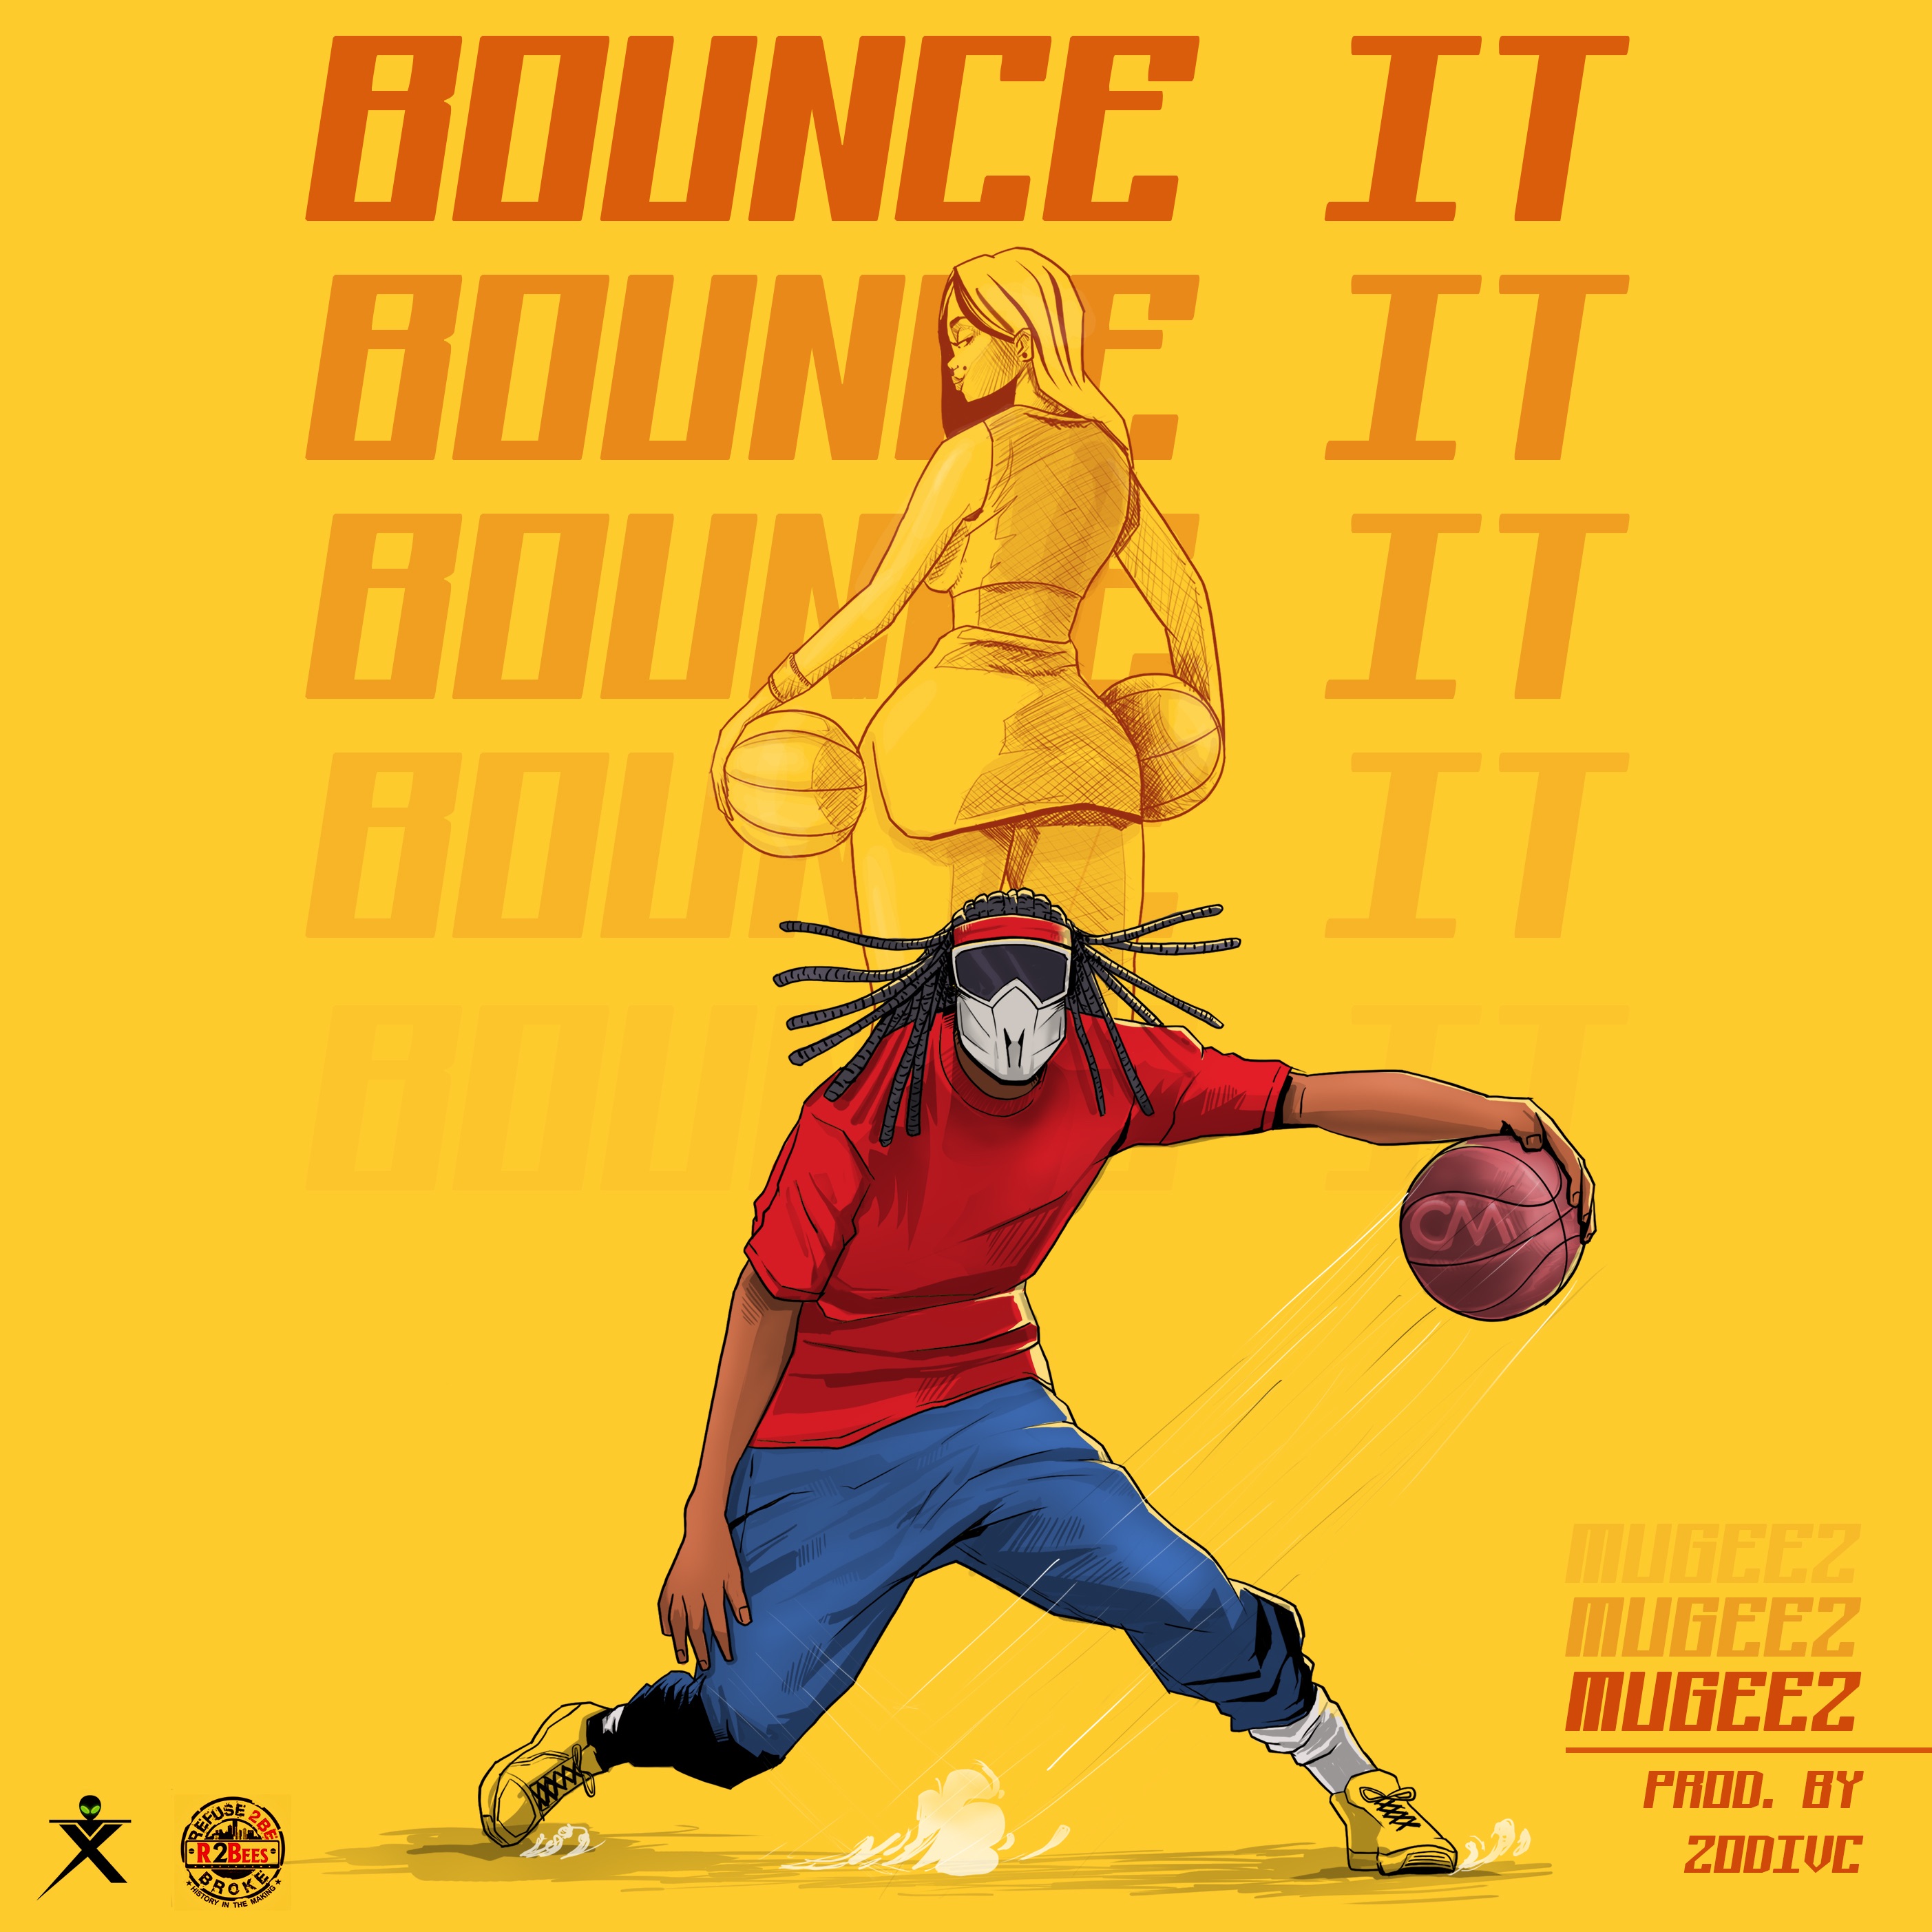 Mugeez Bounce It